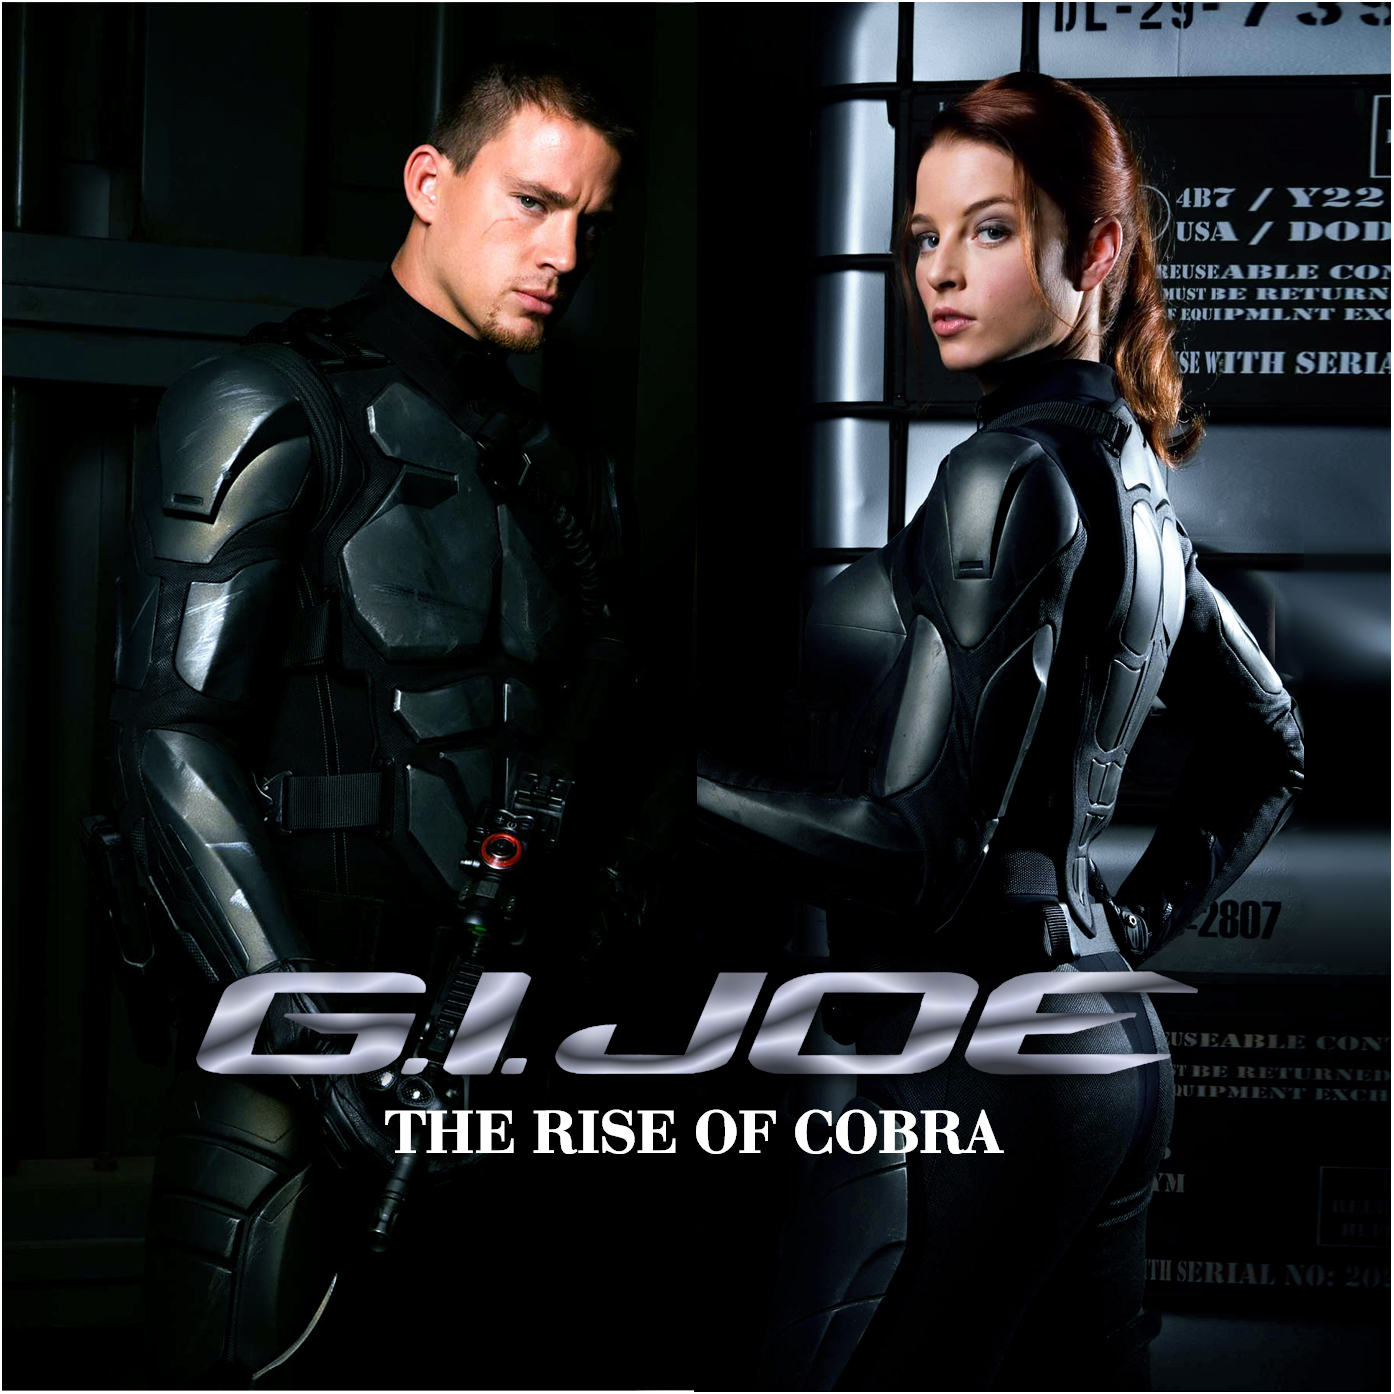 The rise of cobra